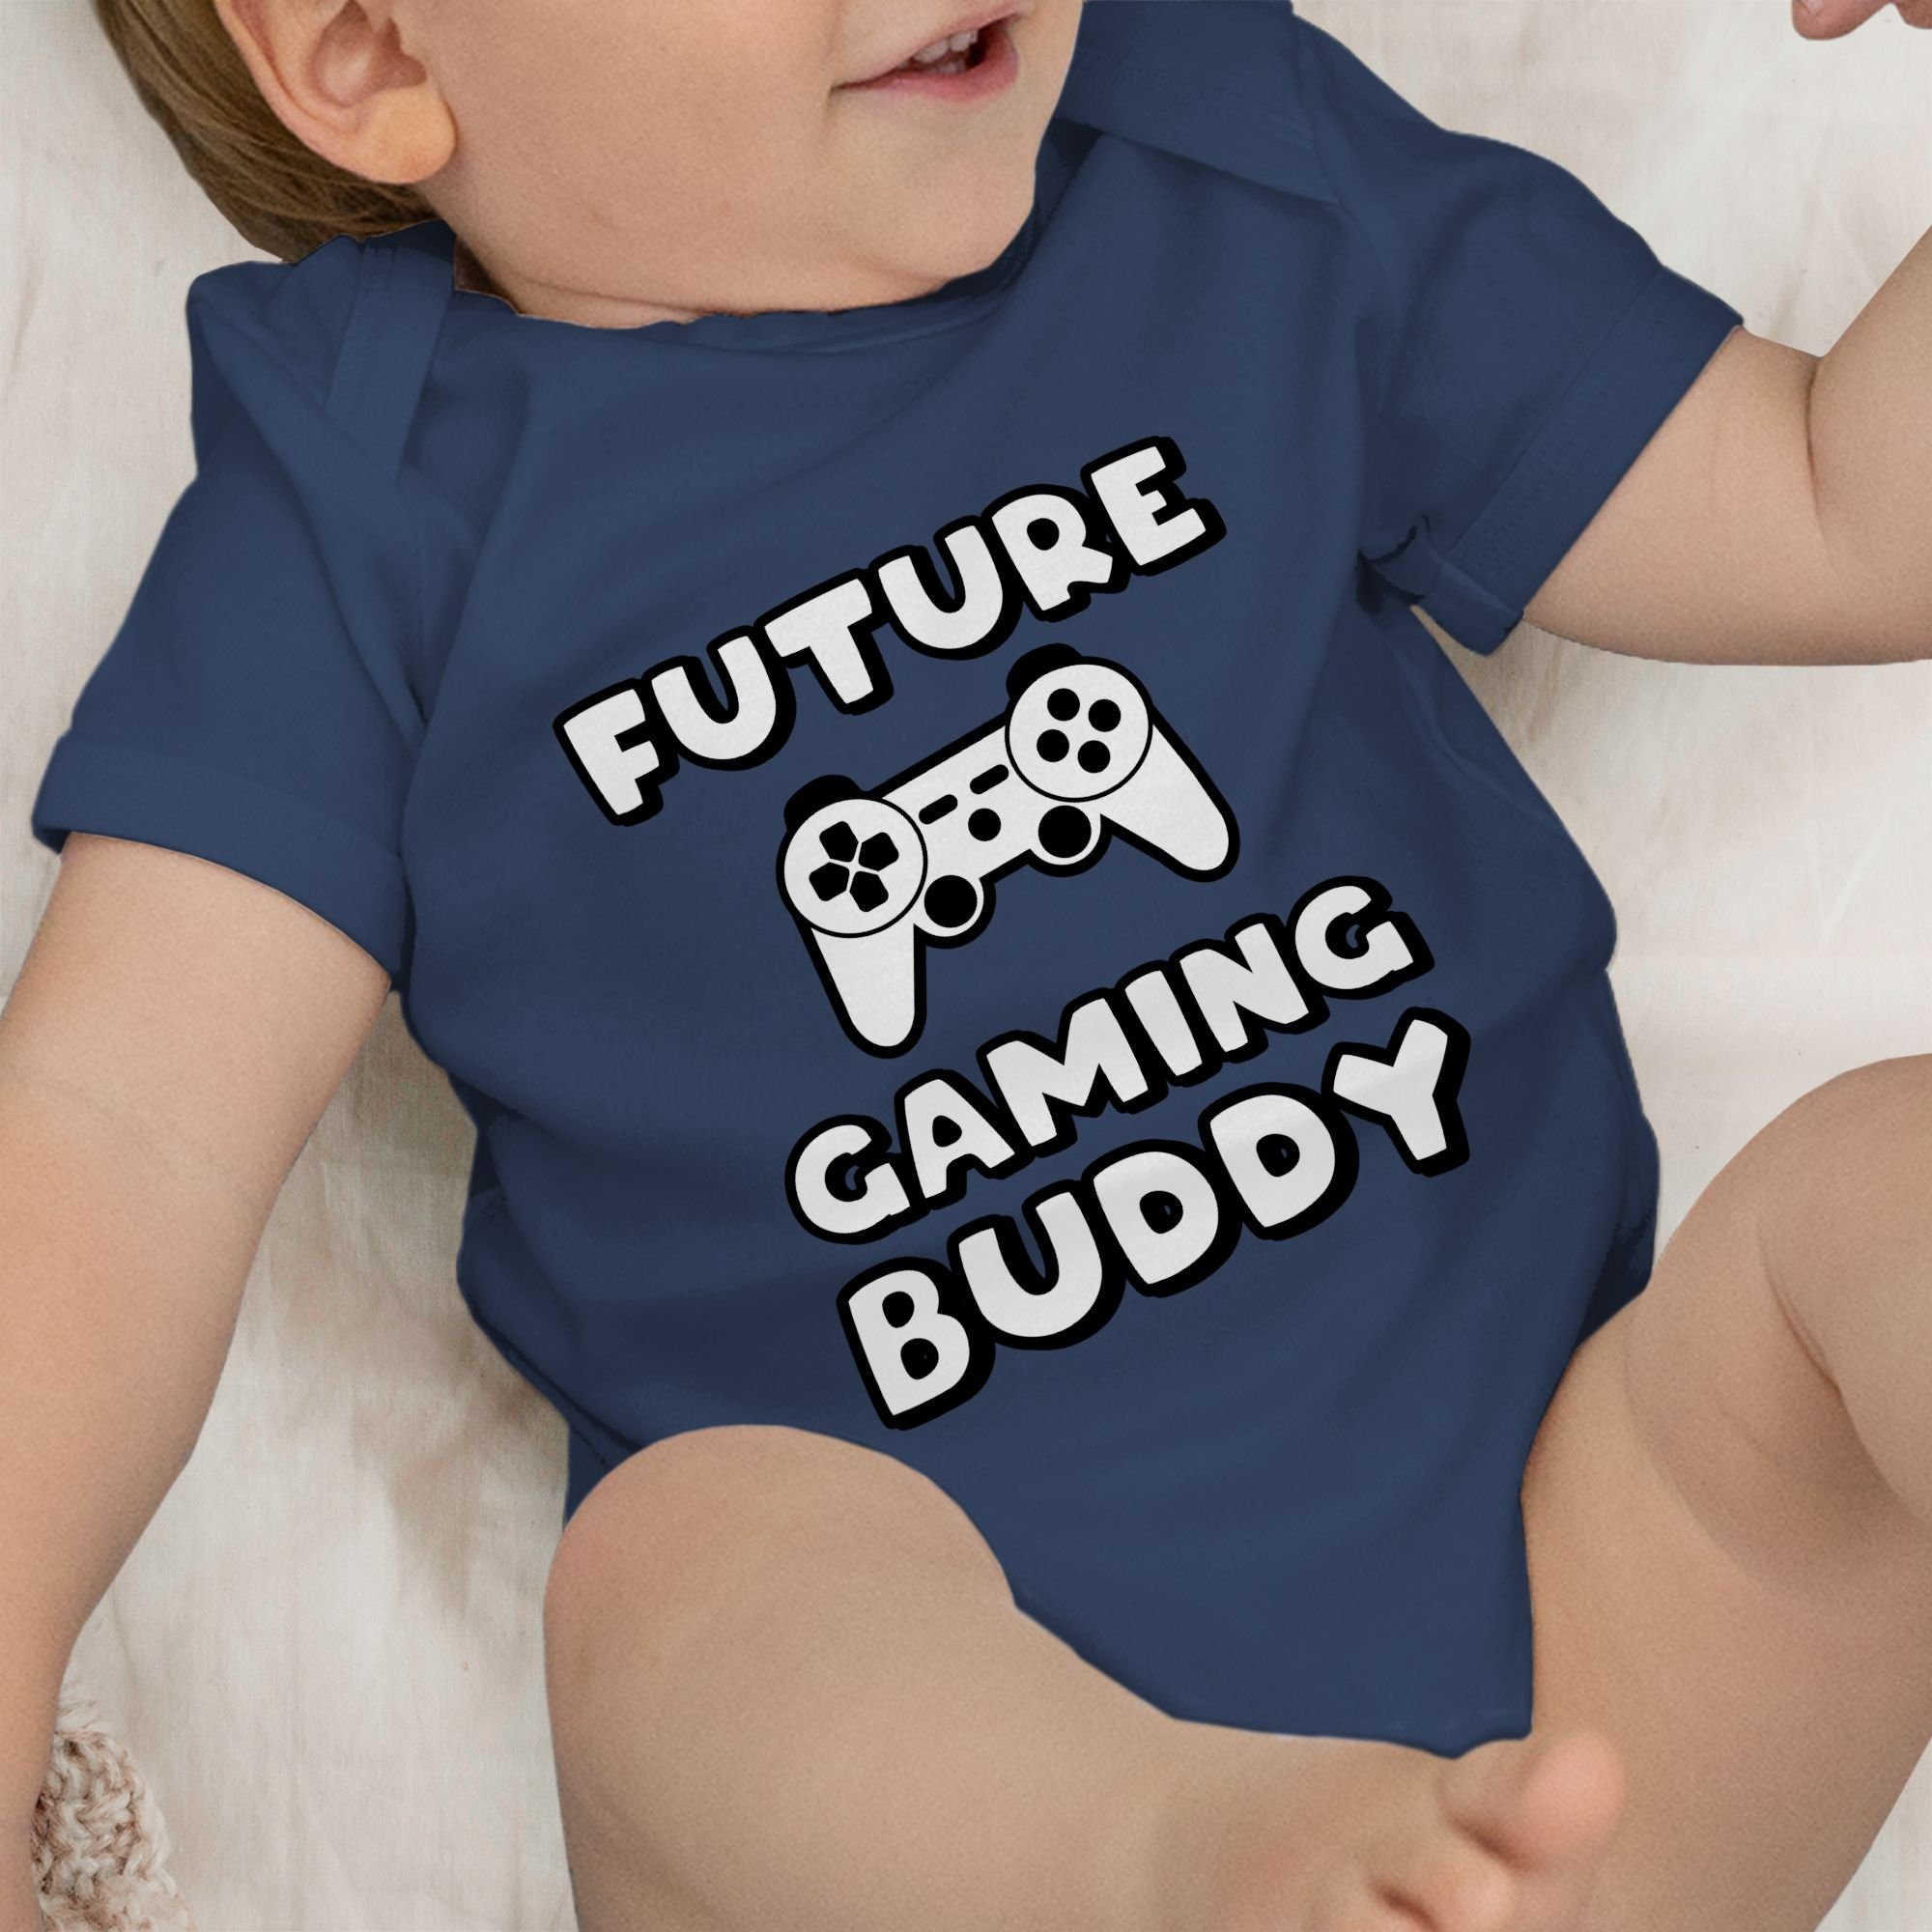 Sprüche Navy Buddy Baby Future Shirtbody Blau Gaming Shirtracer 2